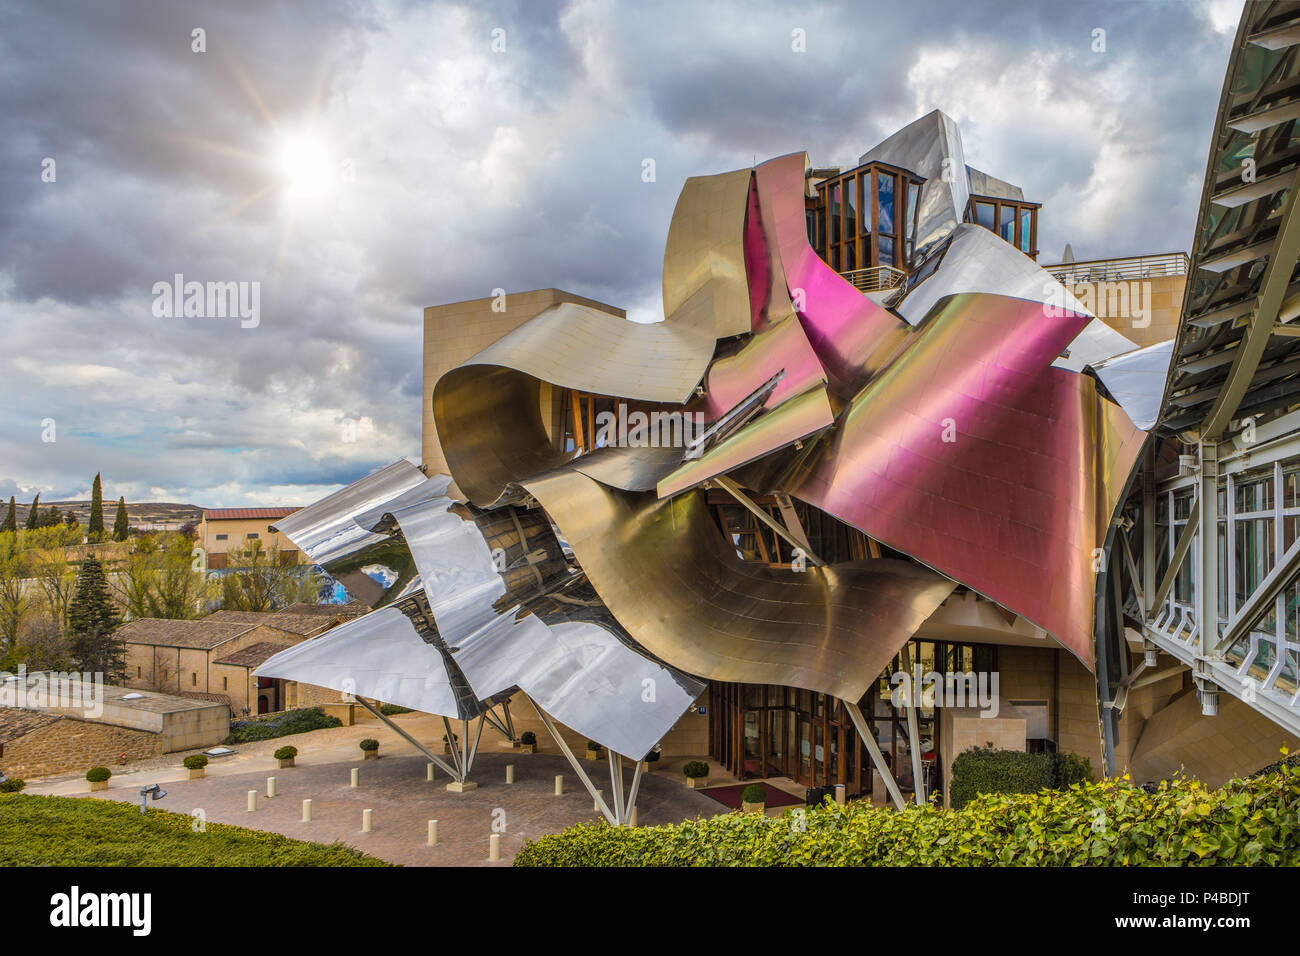 El Ciego City, Frank Gehry architect, La Rioja Area, Logroño province, Marques de Riscal Hotel, Spain, wine cellar Stock Photo